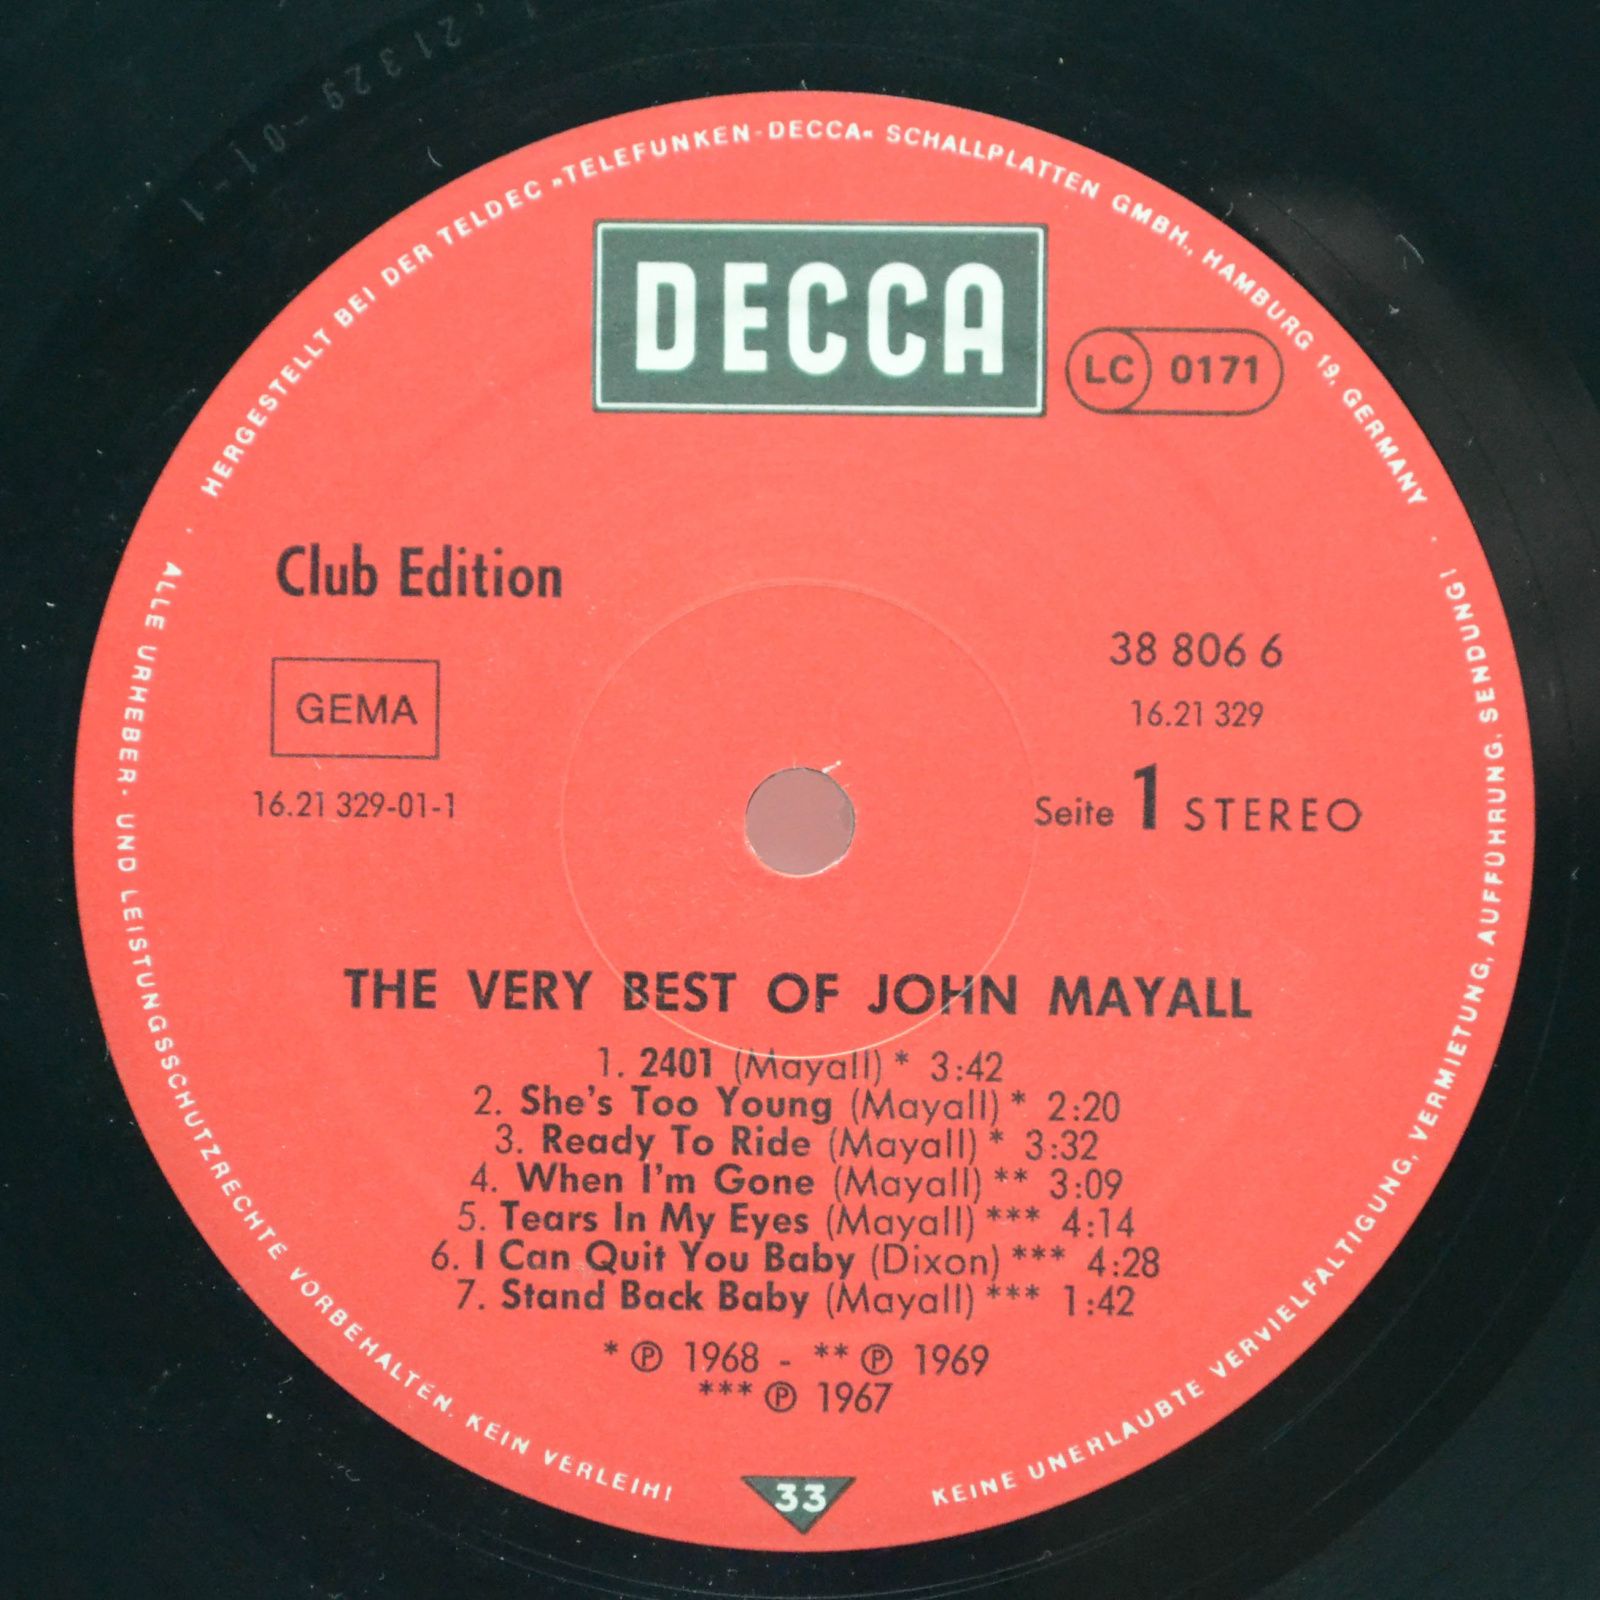 John Mayall — The Very Best Of John Mayall, 1976